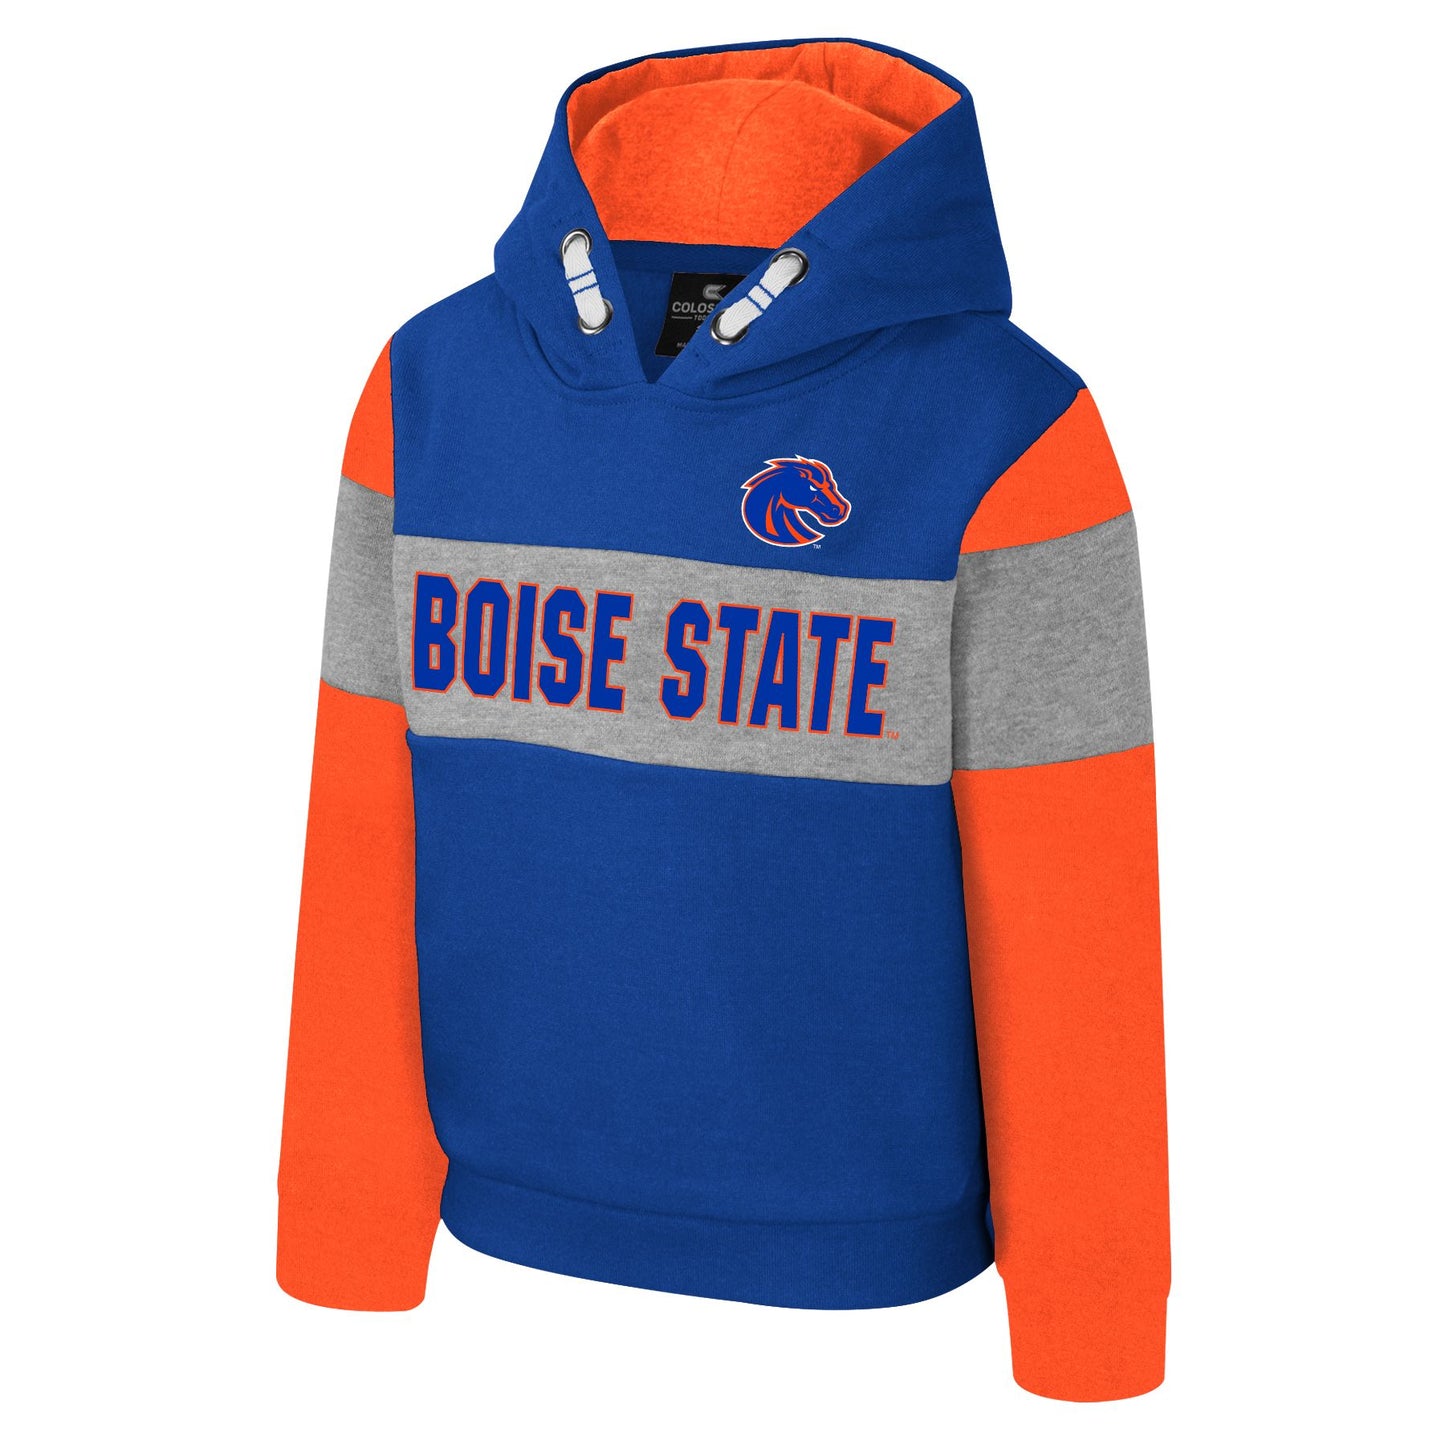 Boise State Broncos Colosseum Toddler Hoodie (Blue/Orange)